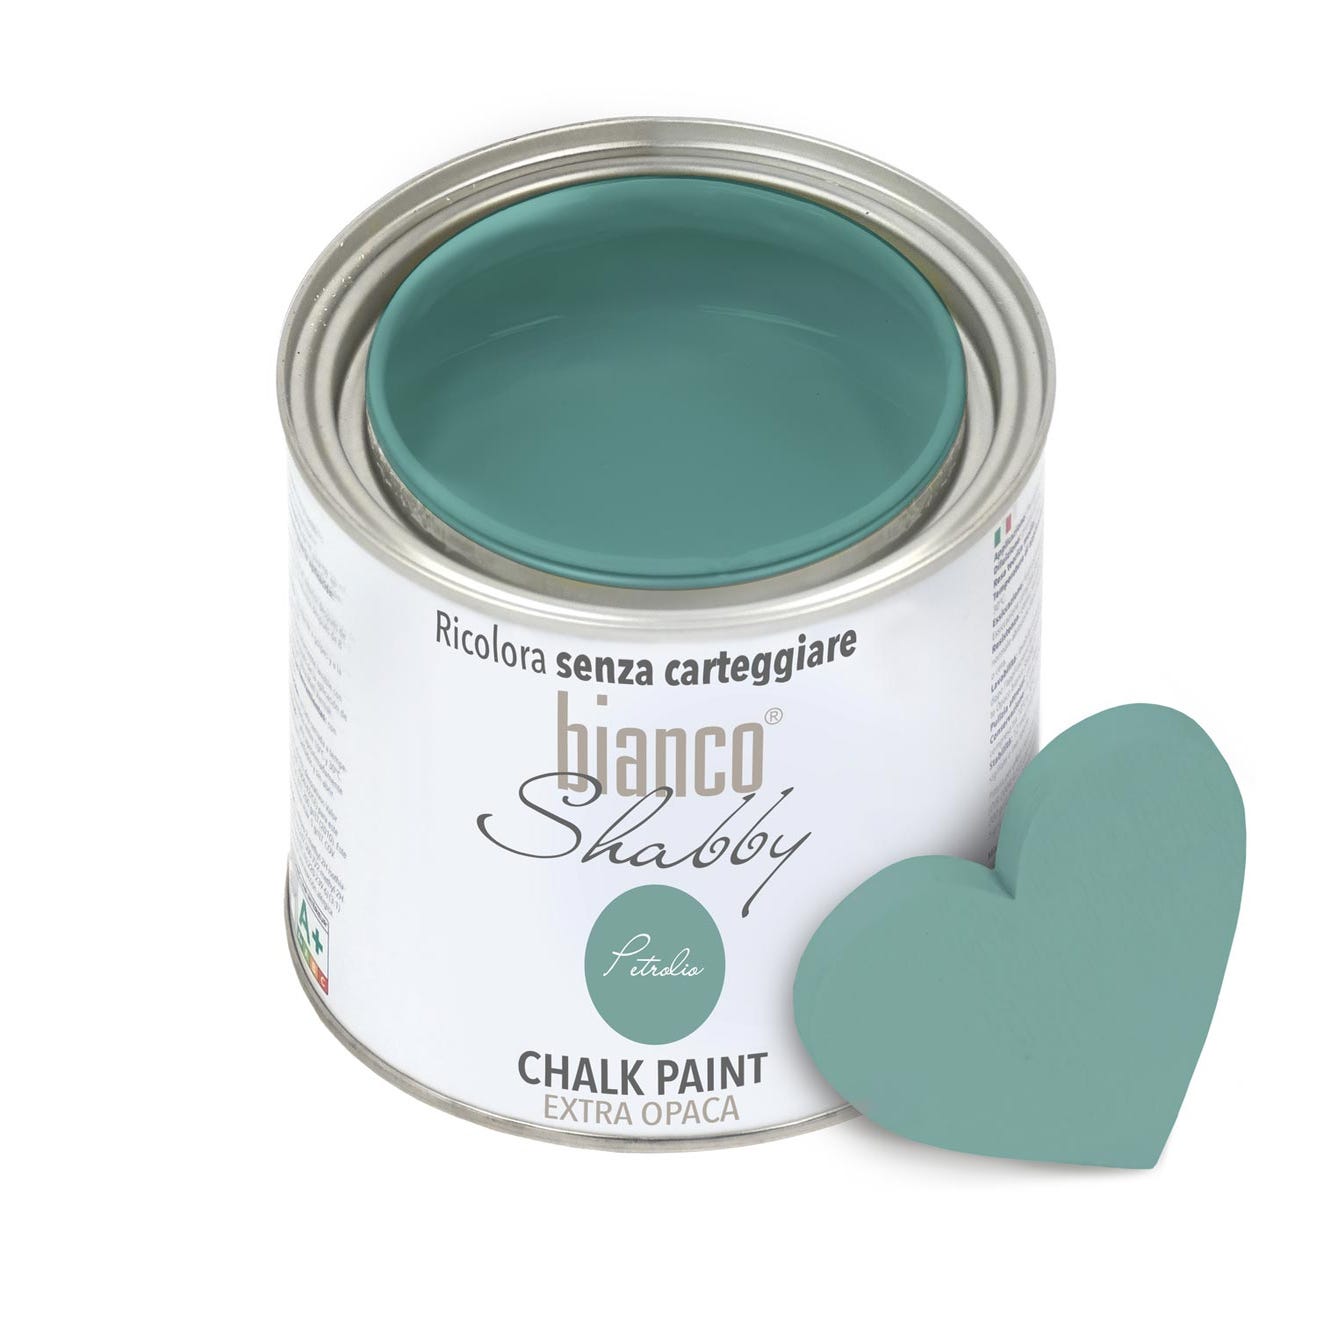 Chalk Paint extra opaca biancoShabby® - Ricolora mobili pareti oggetti senza  carteggiare - Petrolio 500 ml